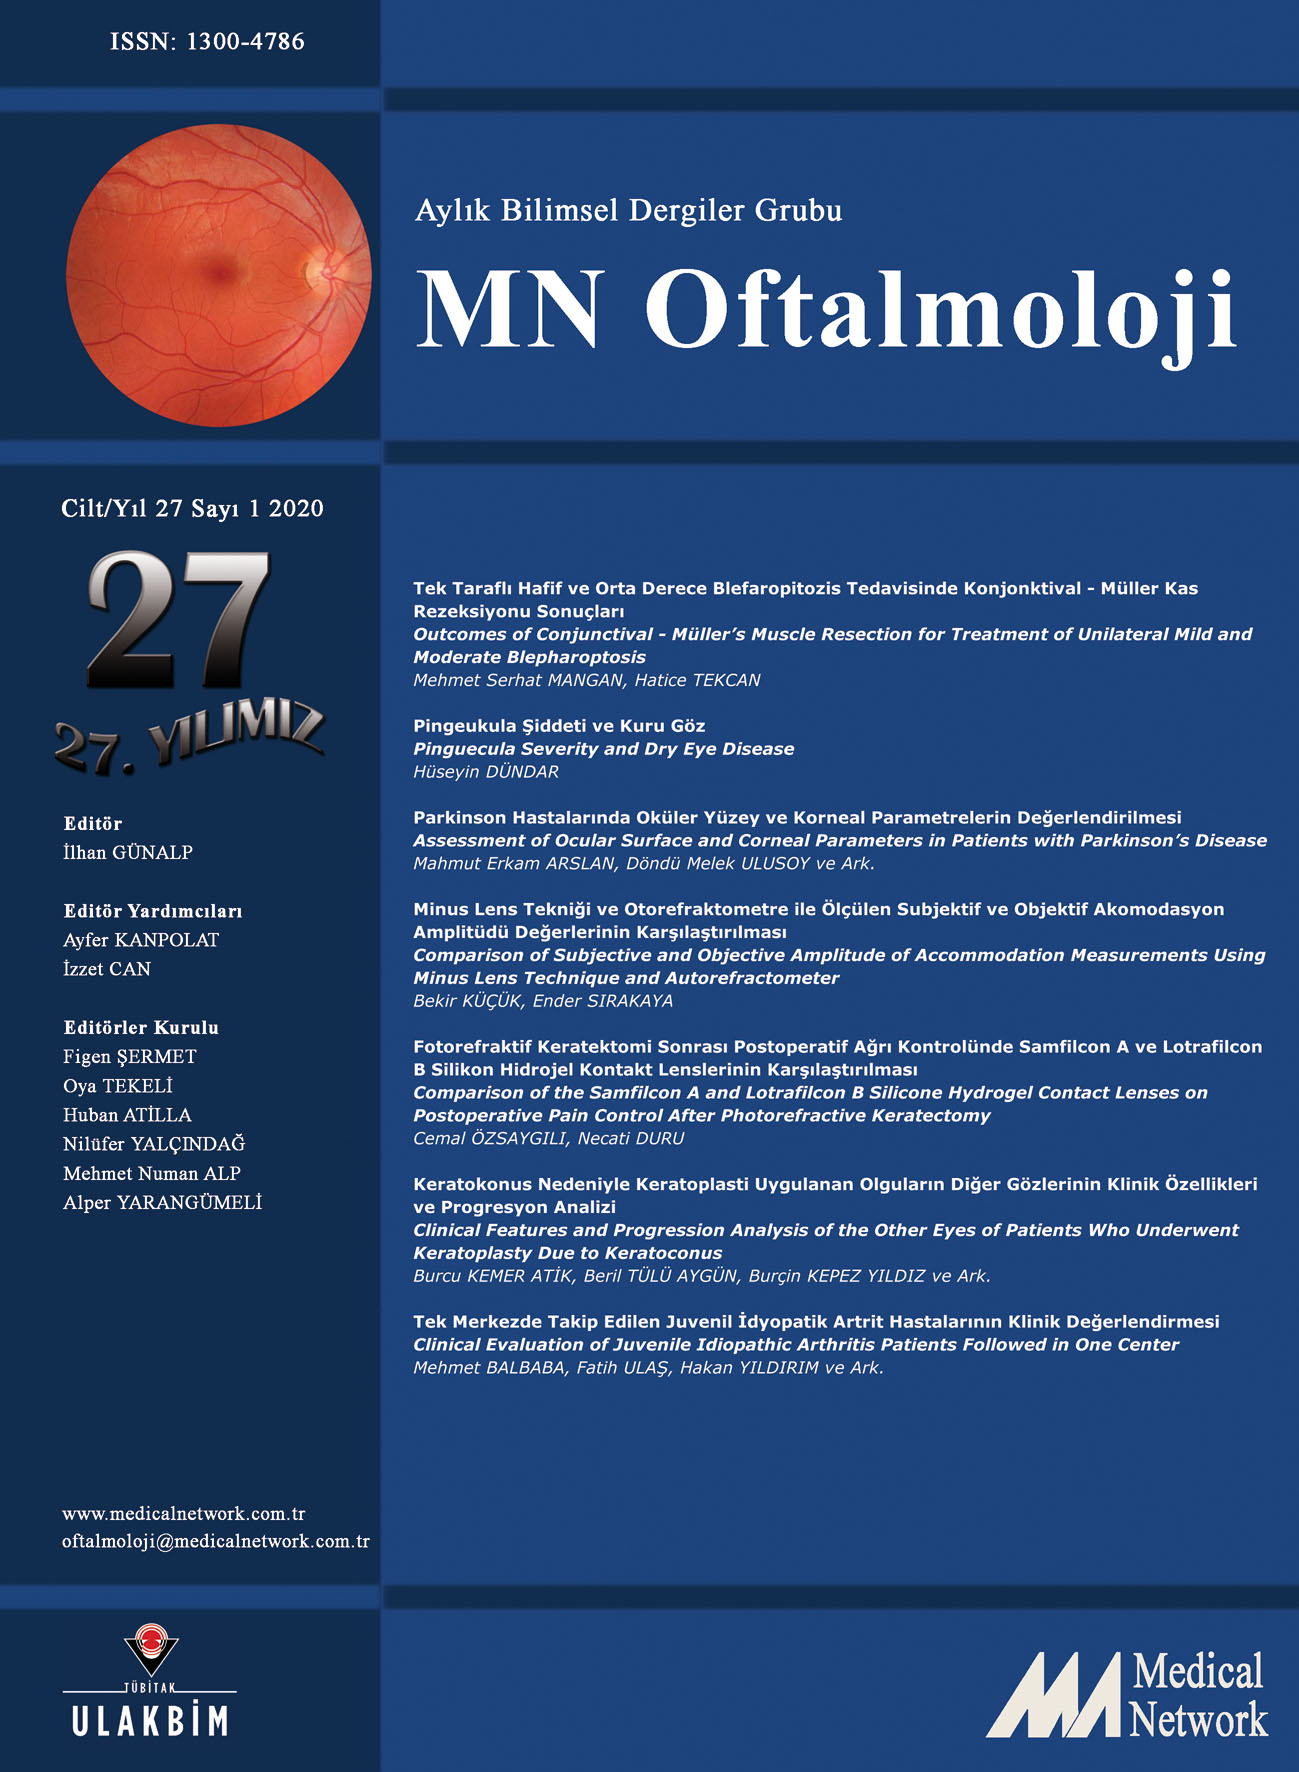 <p>MN Oftalmoloji Cilt: 27 Say: 1 2020 (MN Ophthalmology Volume: 27 No 1 2020)</p>